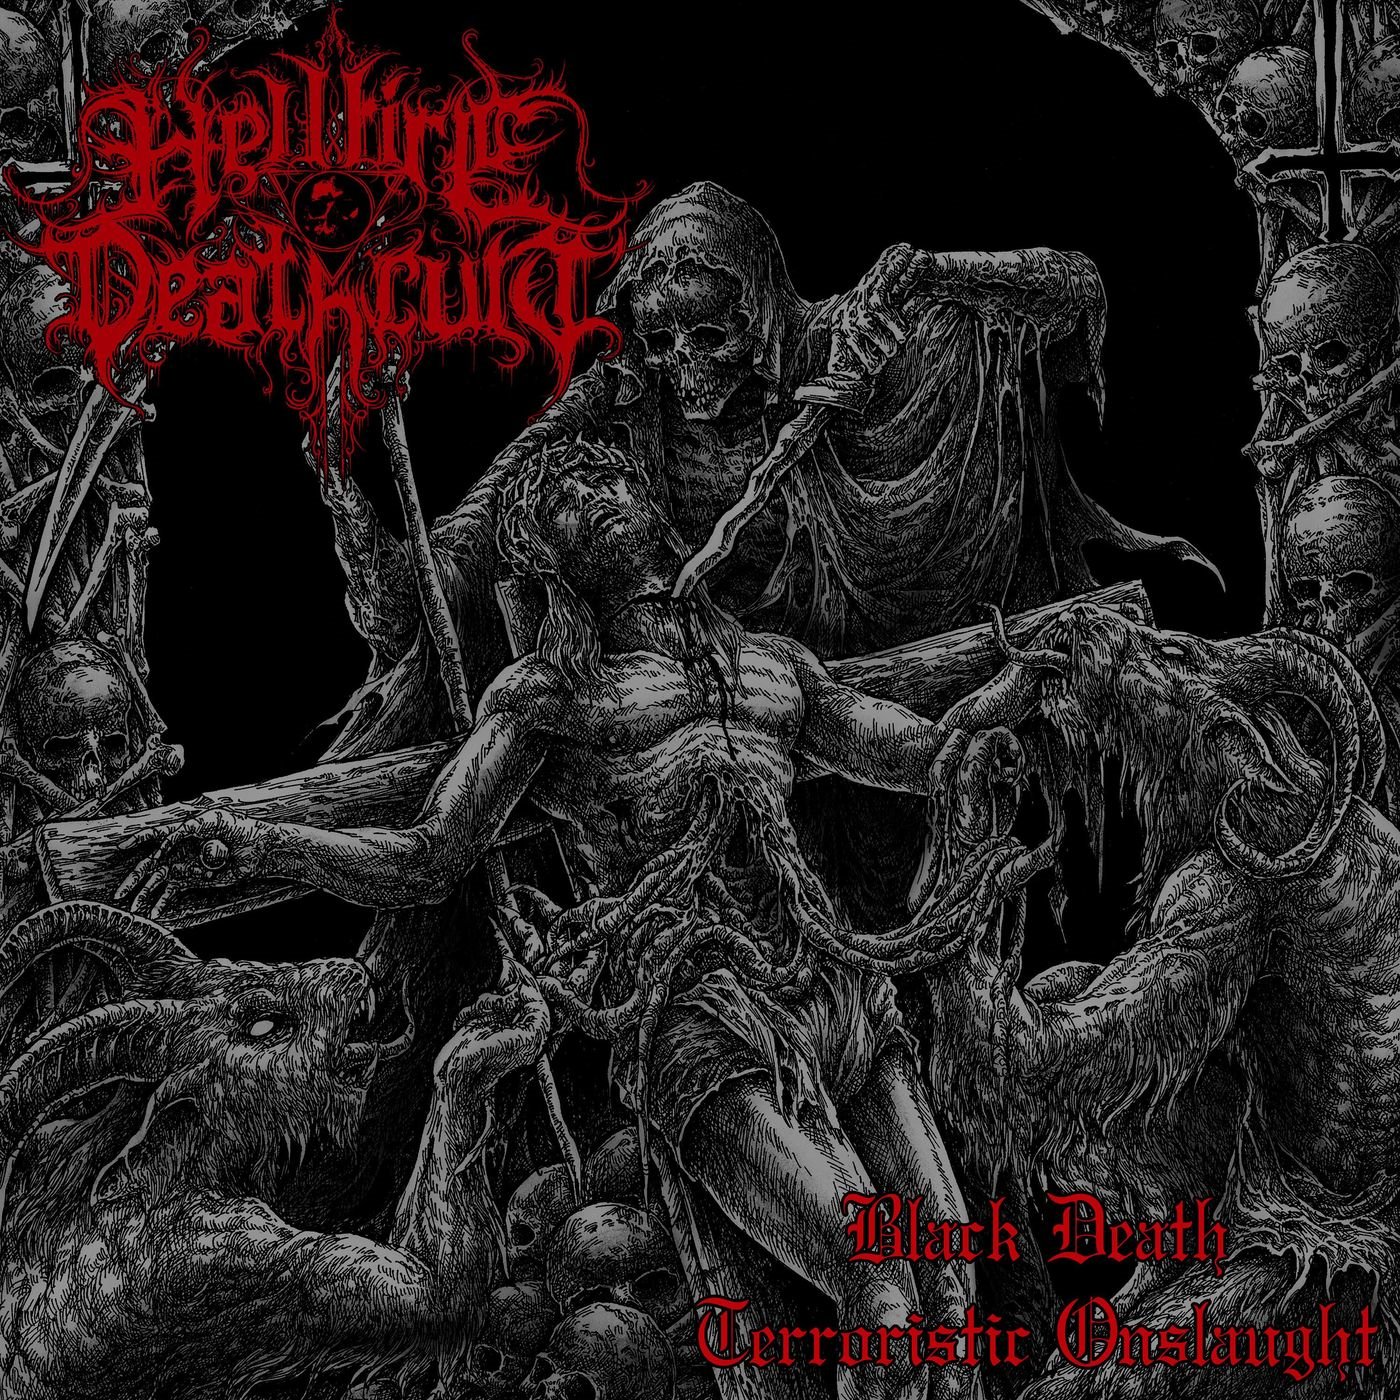 Обложки метал групп. Hellfire Deathcult. Hellfire Deathcult Black Death terroristic Onslaught. Bestial Black Metal обложки.